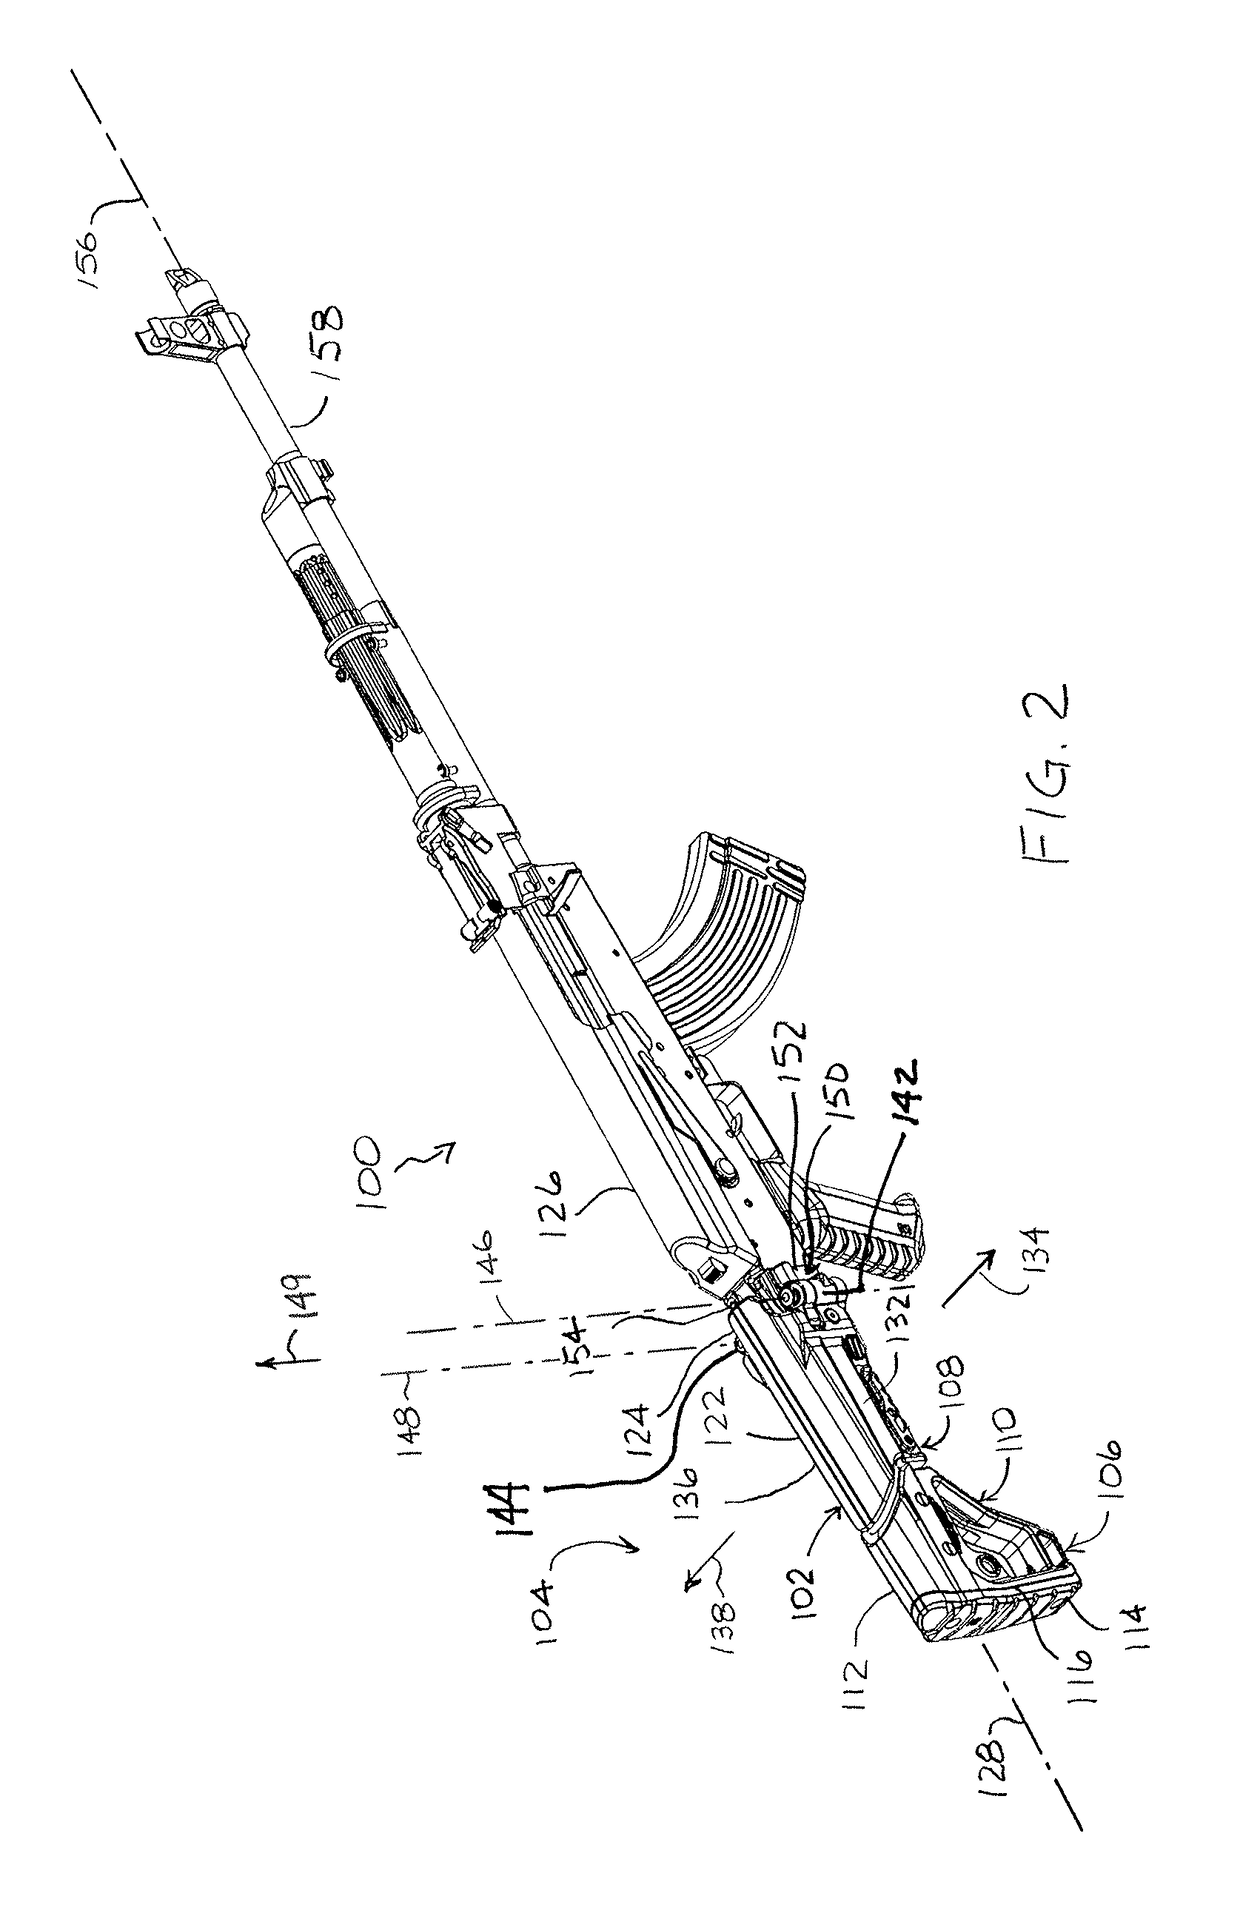 Adjustable length bi-directional folding stock for firearm